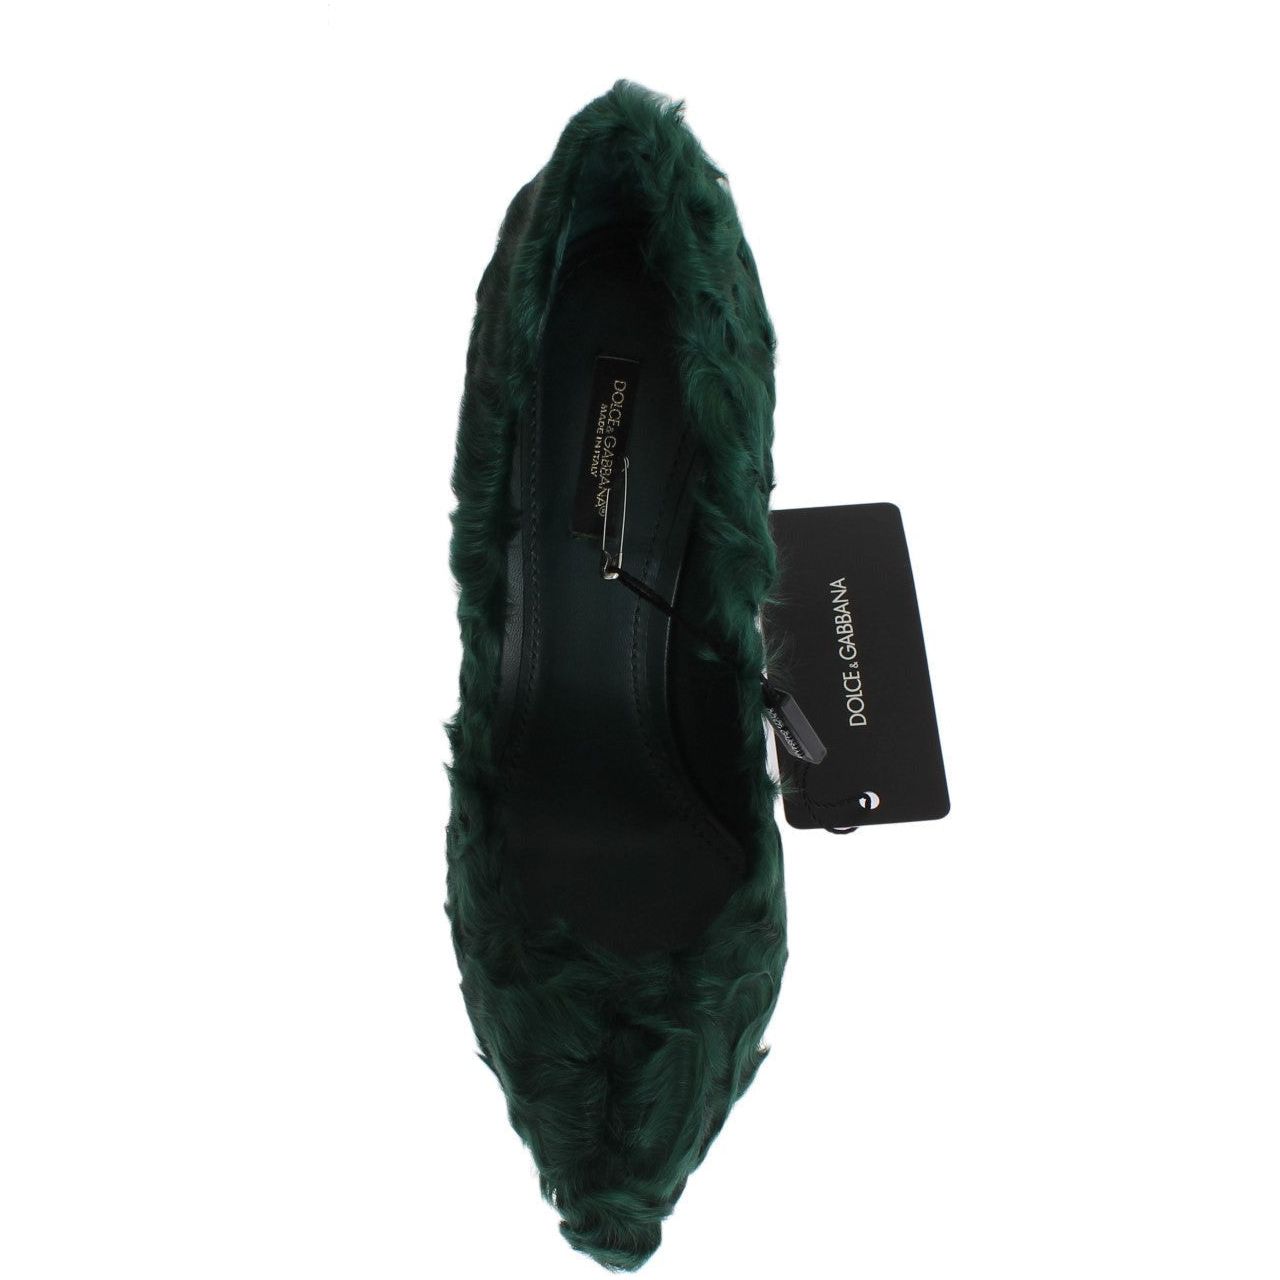 Dolce & Gabbana Elegant Green Xiangao Fur Leather Pumps green-xiangao-lamb-fur-leather-pumps 325166-green-xiangao-lamb-fur-leather-pumps-3_72390965-db0e-48fa-bd83-2a79157e880d.jpg